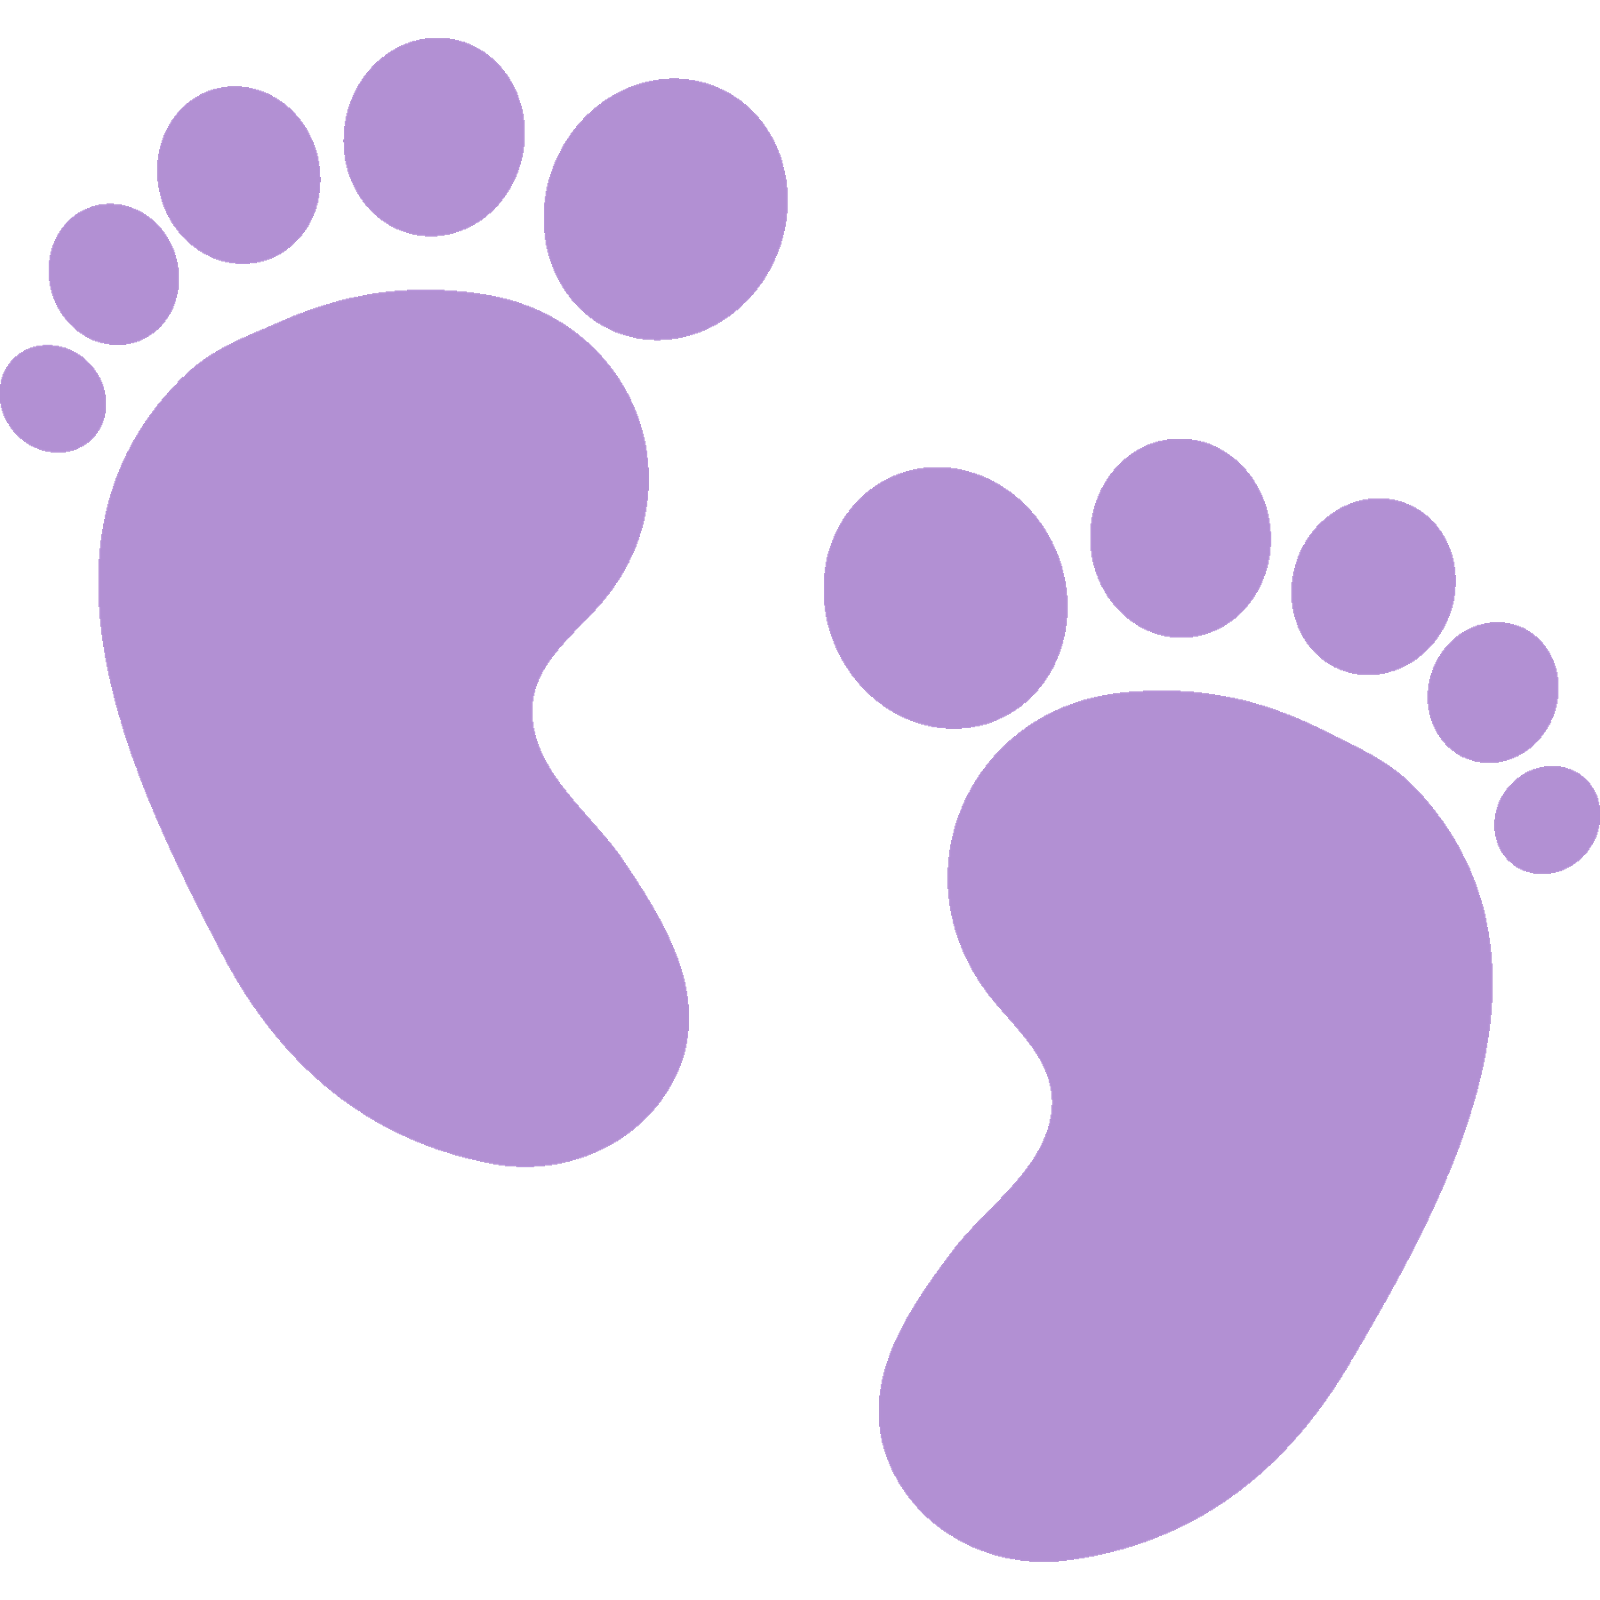 footprints clipart purple